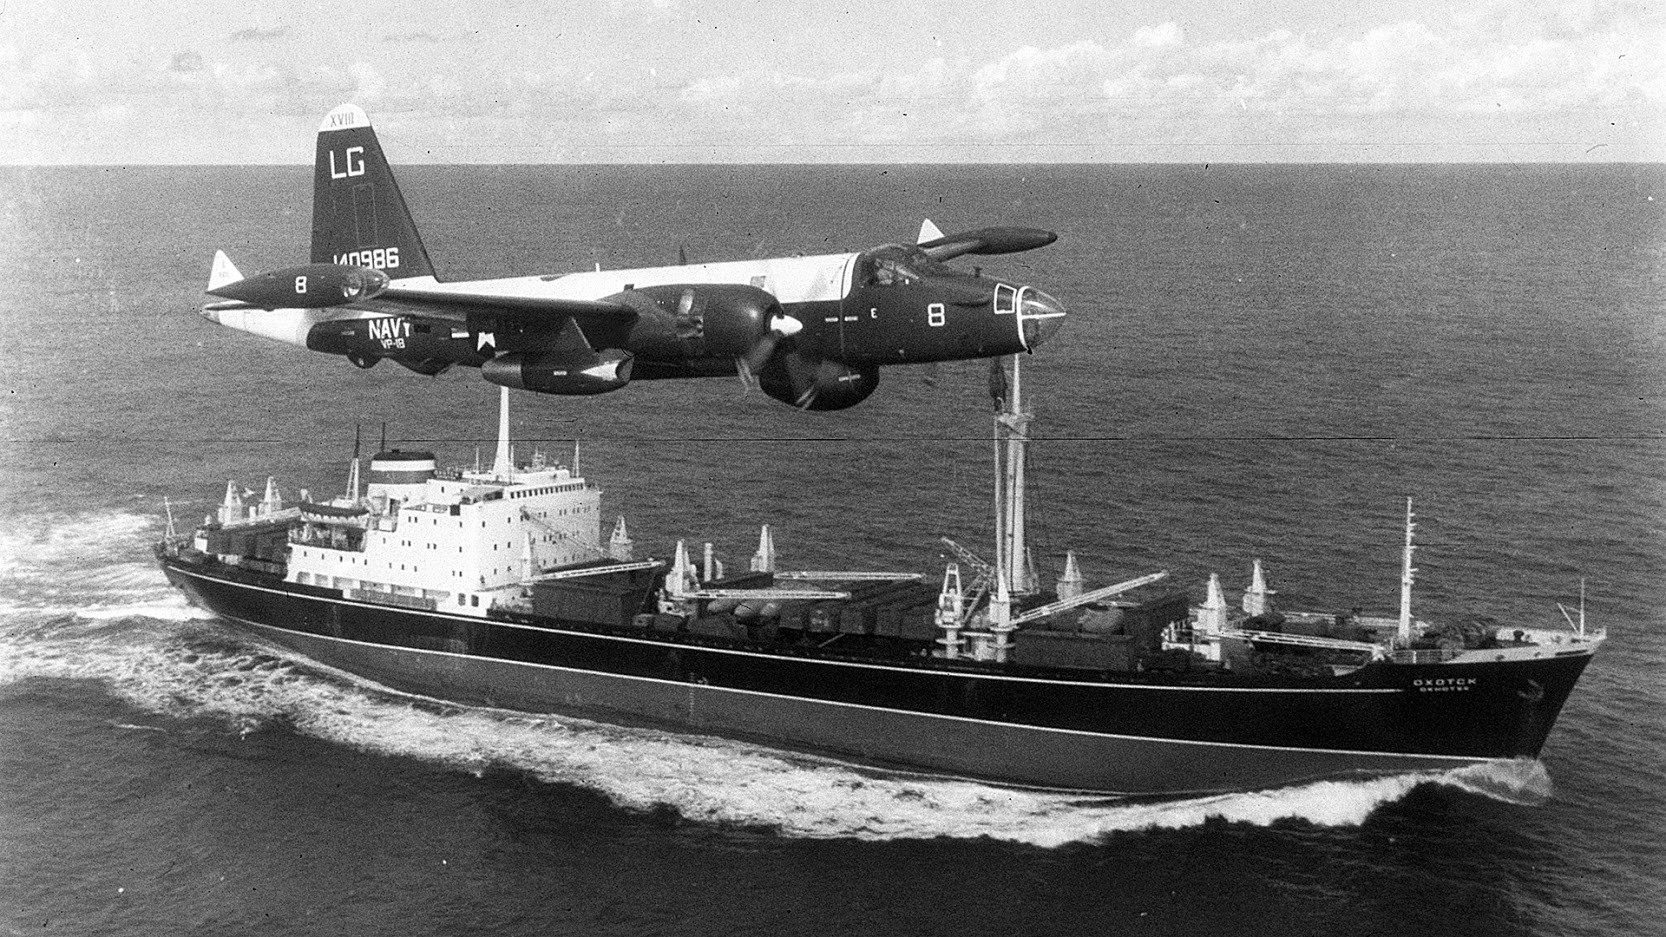 P2V Neptune, američki patrolni zrakoplov leti iznad sovjetskog teretnog broda tokom Kubanske krize.